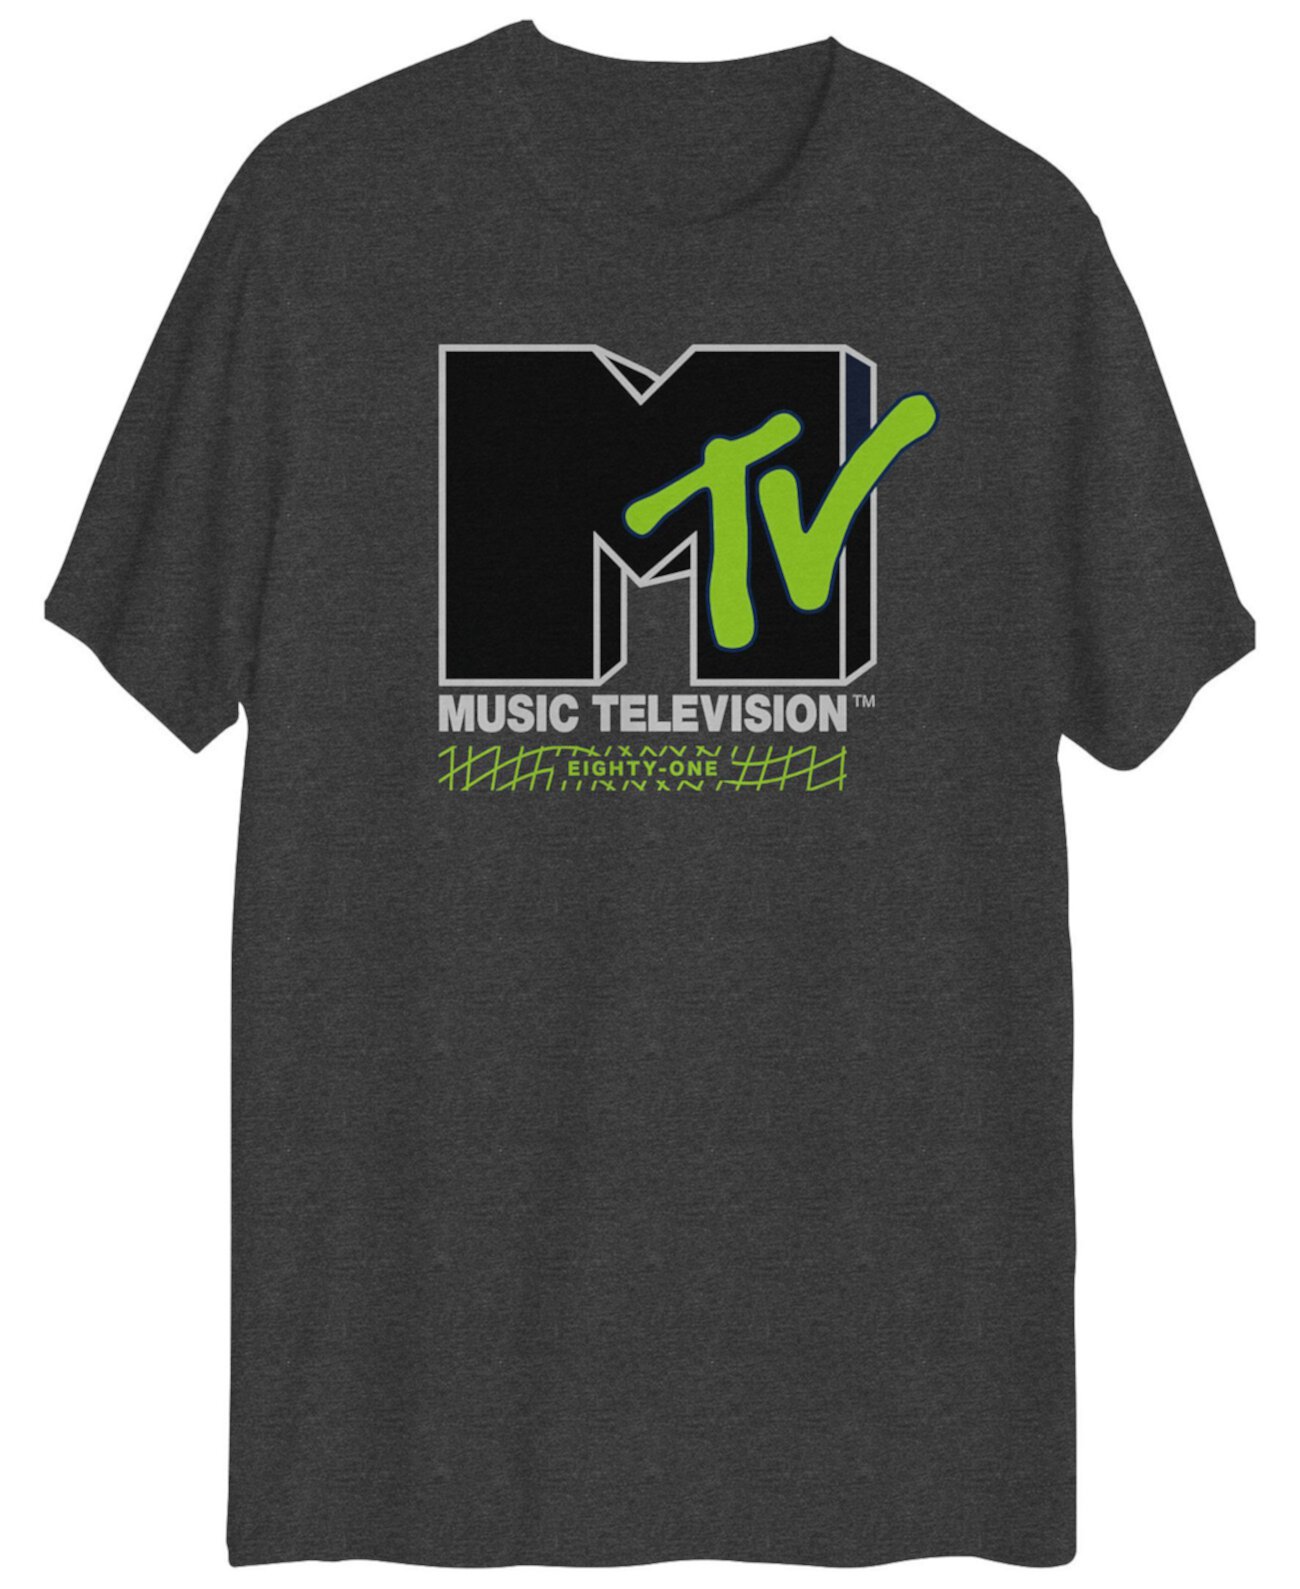 Мужская футболка с короткими рукавами и графическим логотипом MTV Hybrid